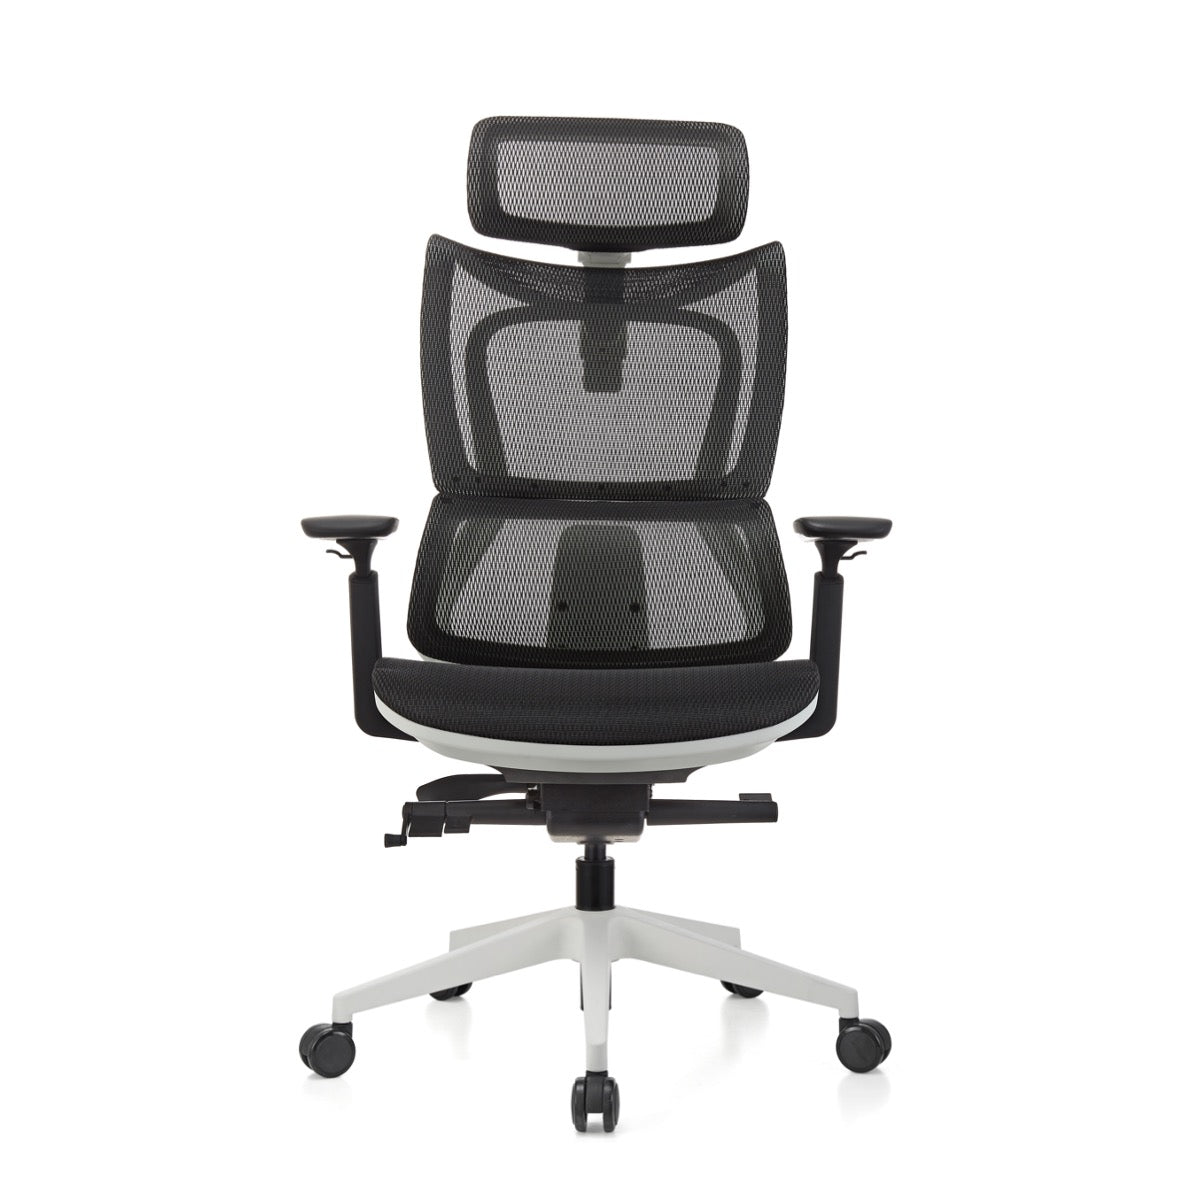 ERGOWORKS – Premium Ergonomic Chair – WHITE FRAME, BLACK MESH SEAT, NYLON BASE With PU CASTOR – EW-G8814NWH-H01